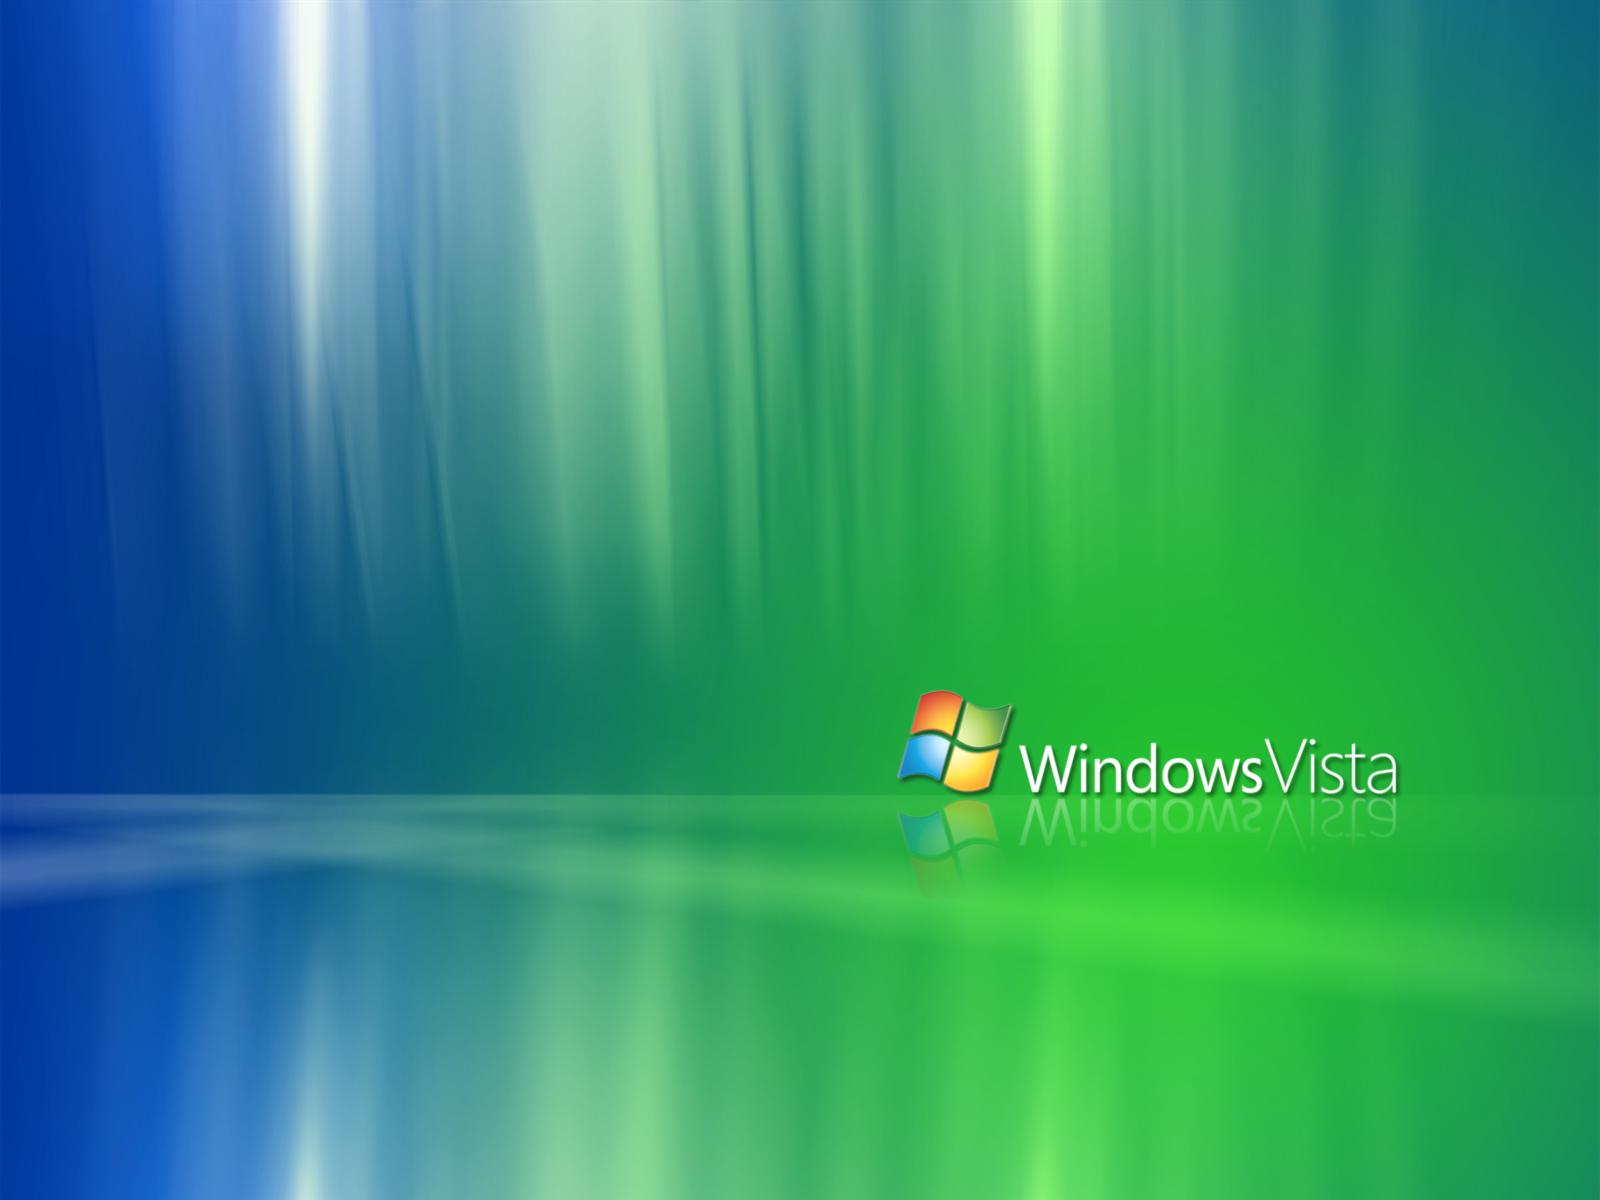 My Toroool HD Wallpaper Of Windows Vista